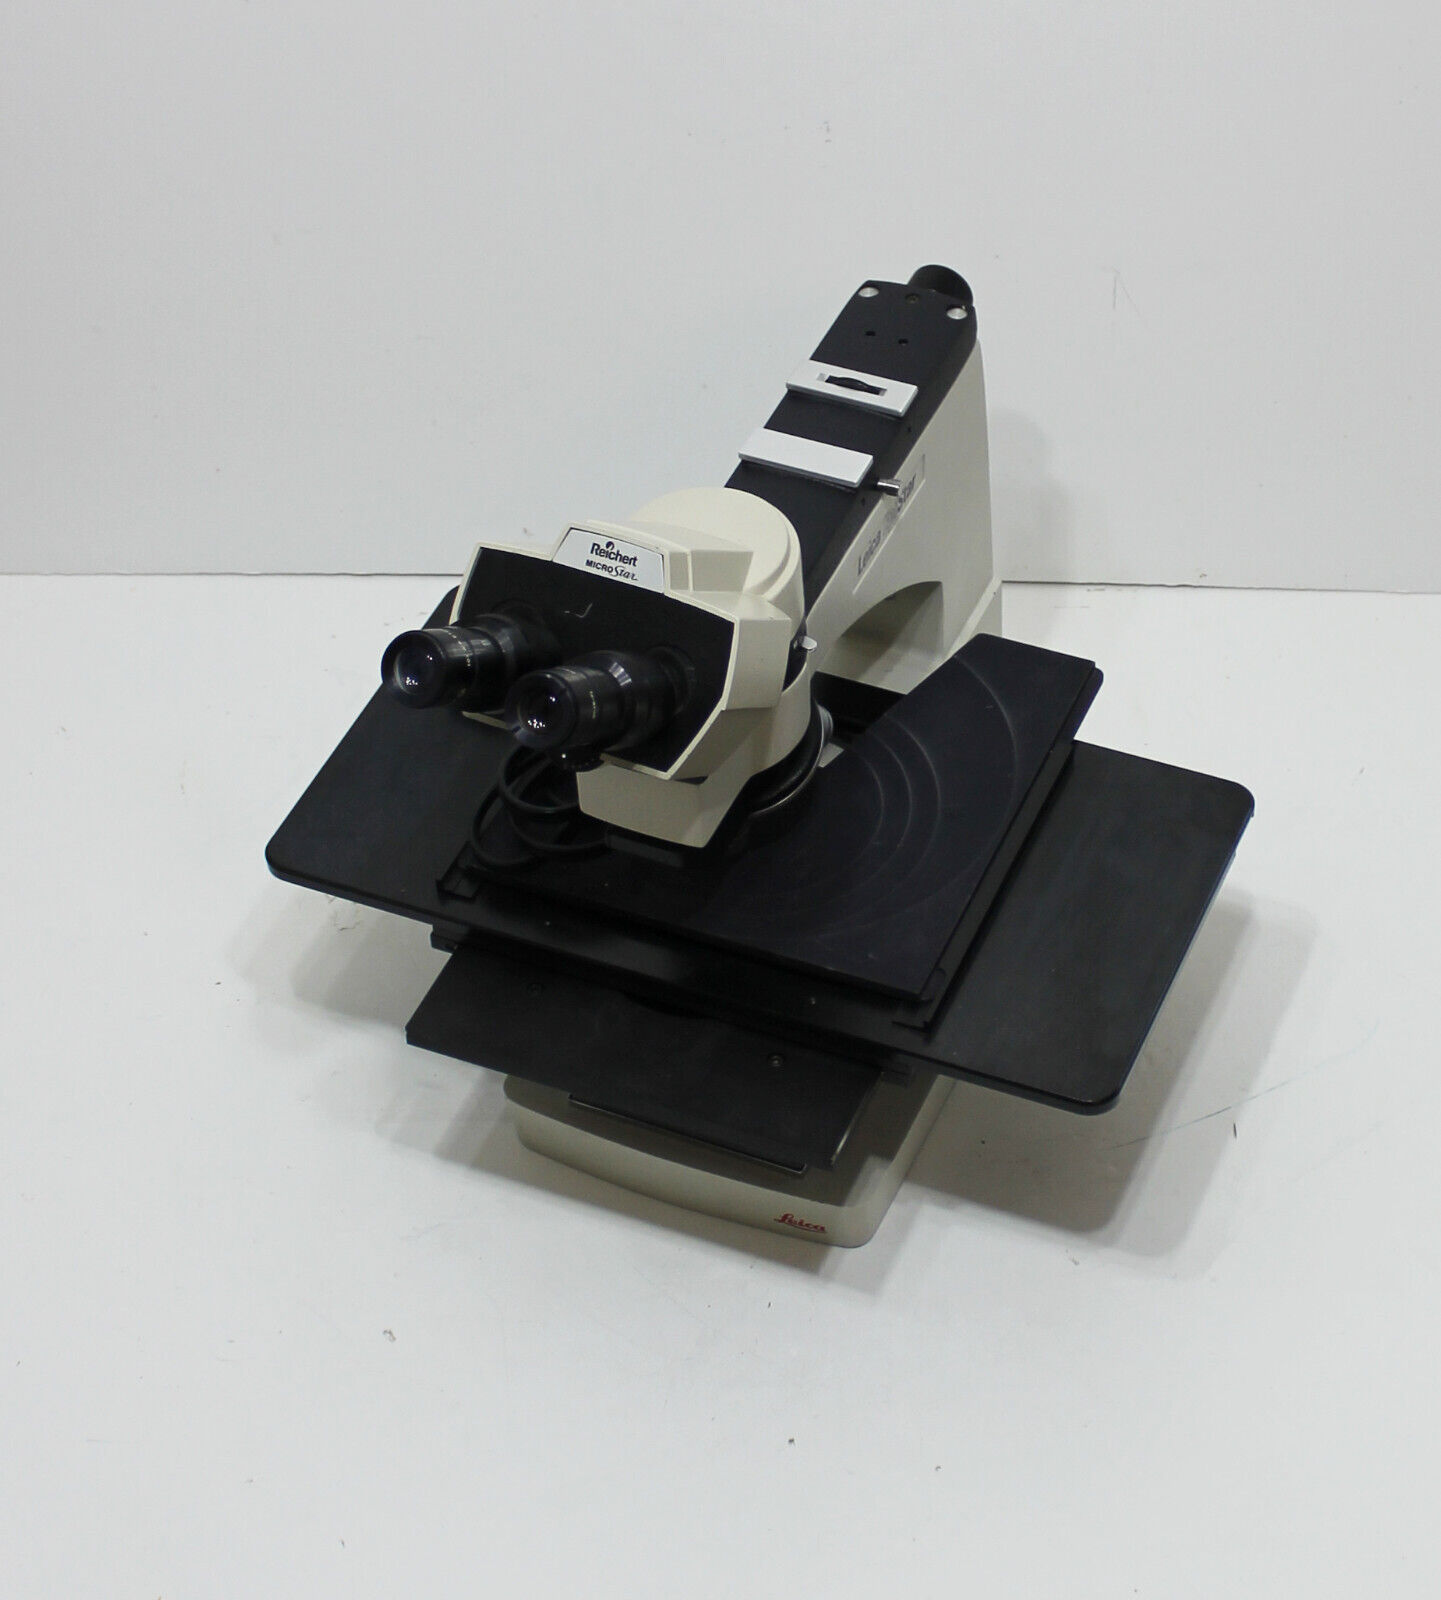 Vintage Reichert MicroStar Leica EpiStar Model 2571 Microscope As IS